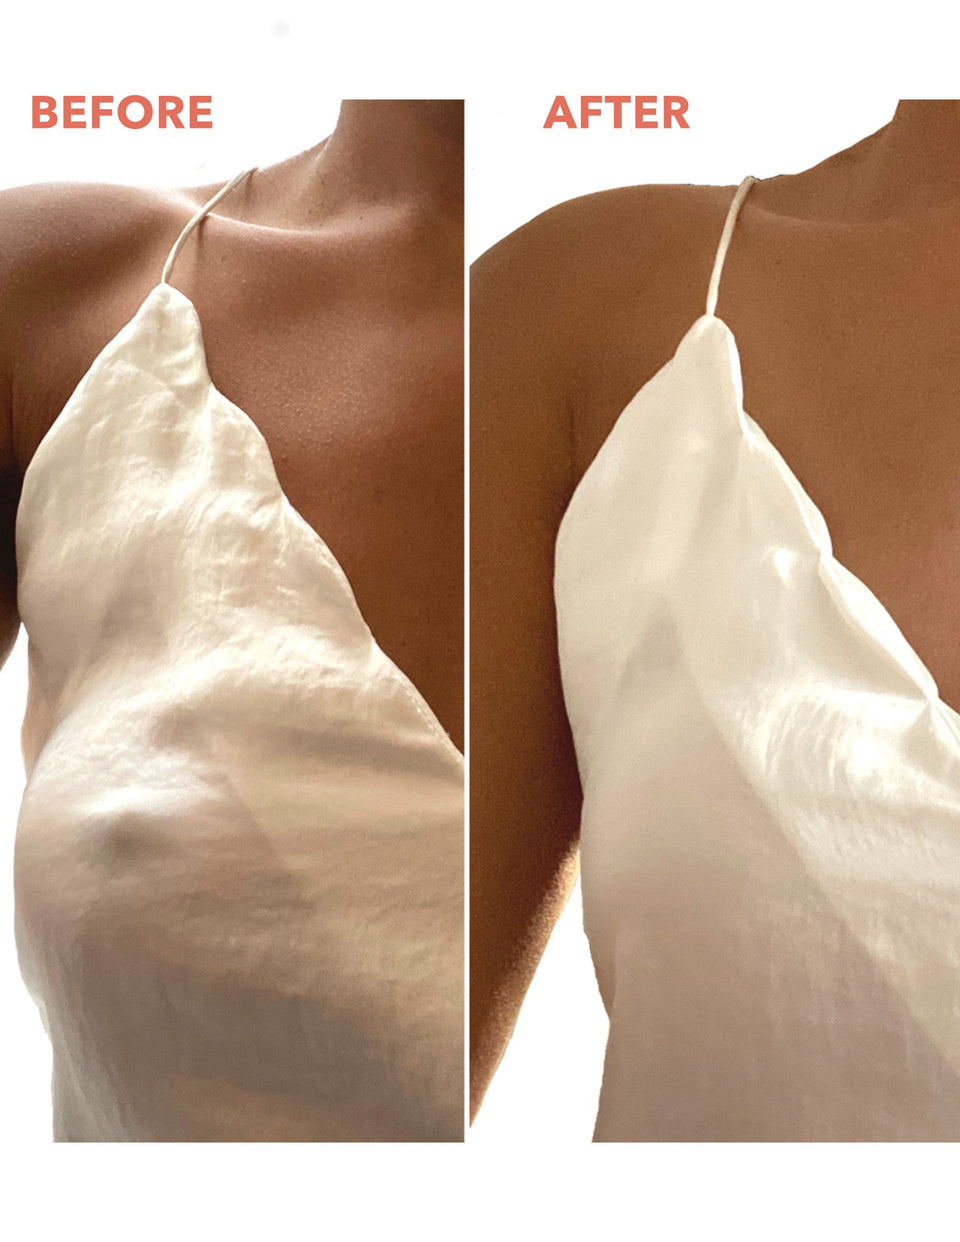 Bristols Six Adhesive Nipple Covers – Melmira Bra & Swimsuits